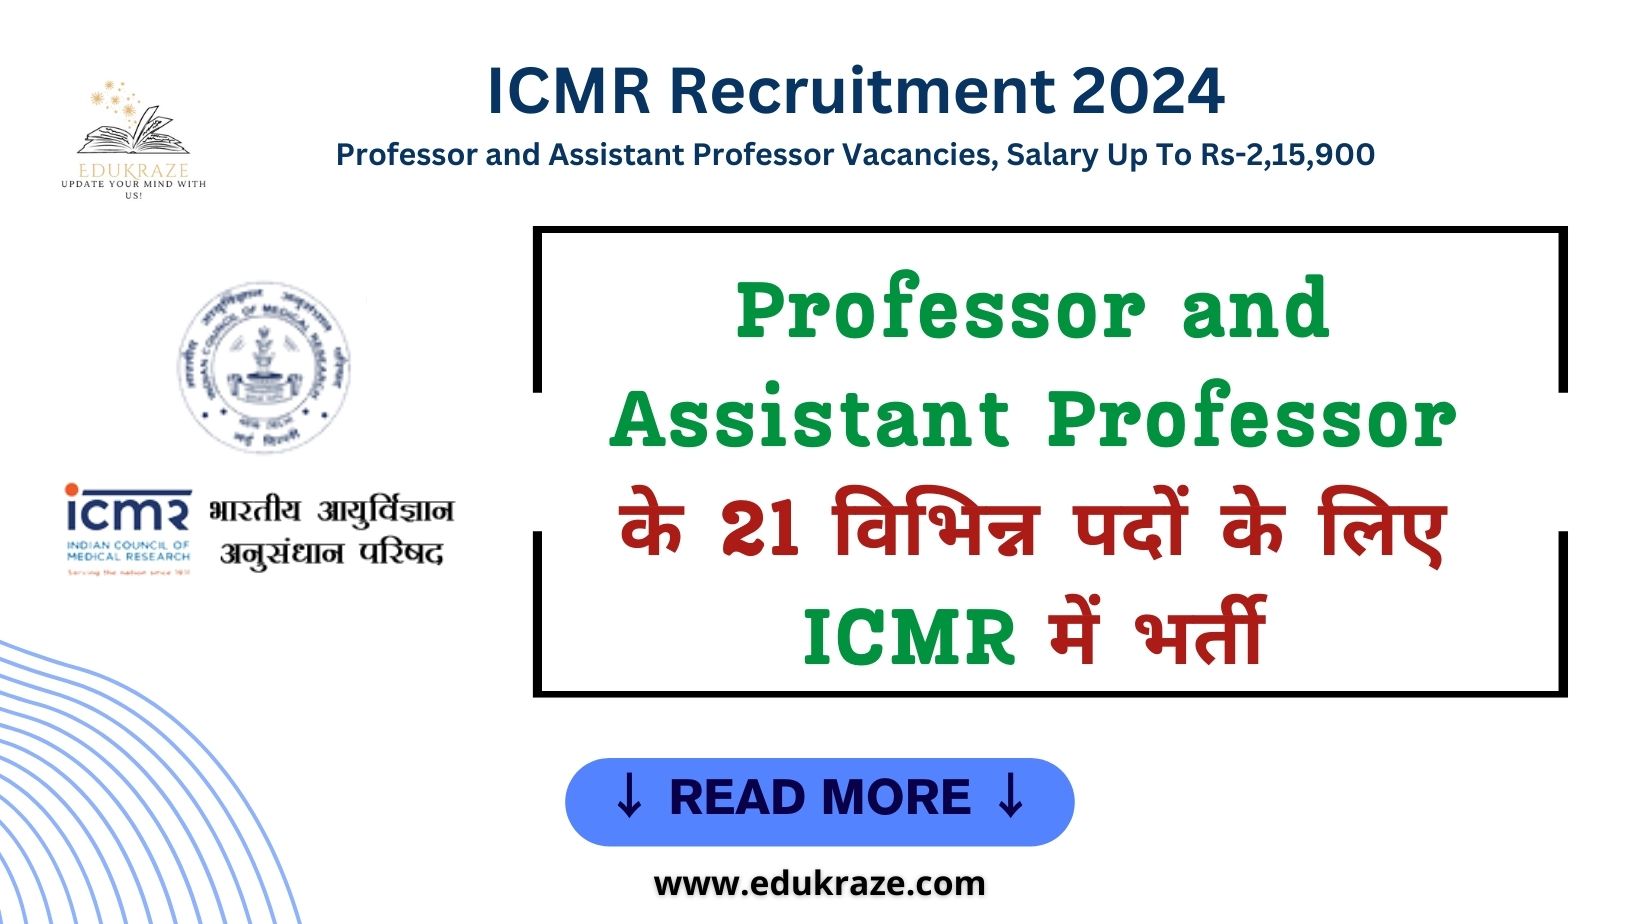 ICMR Recruitment 2024 - 22 Vacancies, Salary Up to Rs. 2,15,900